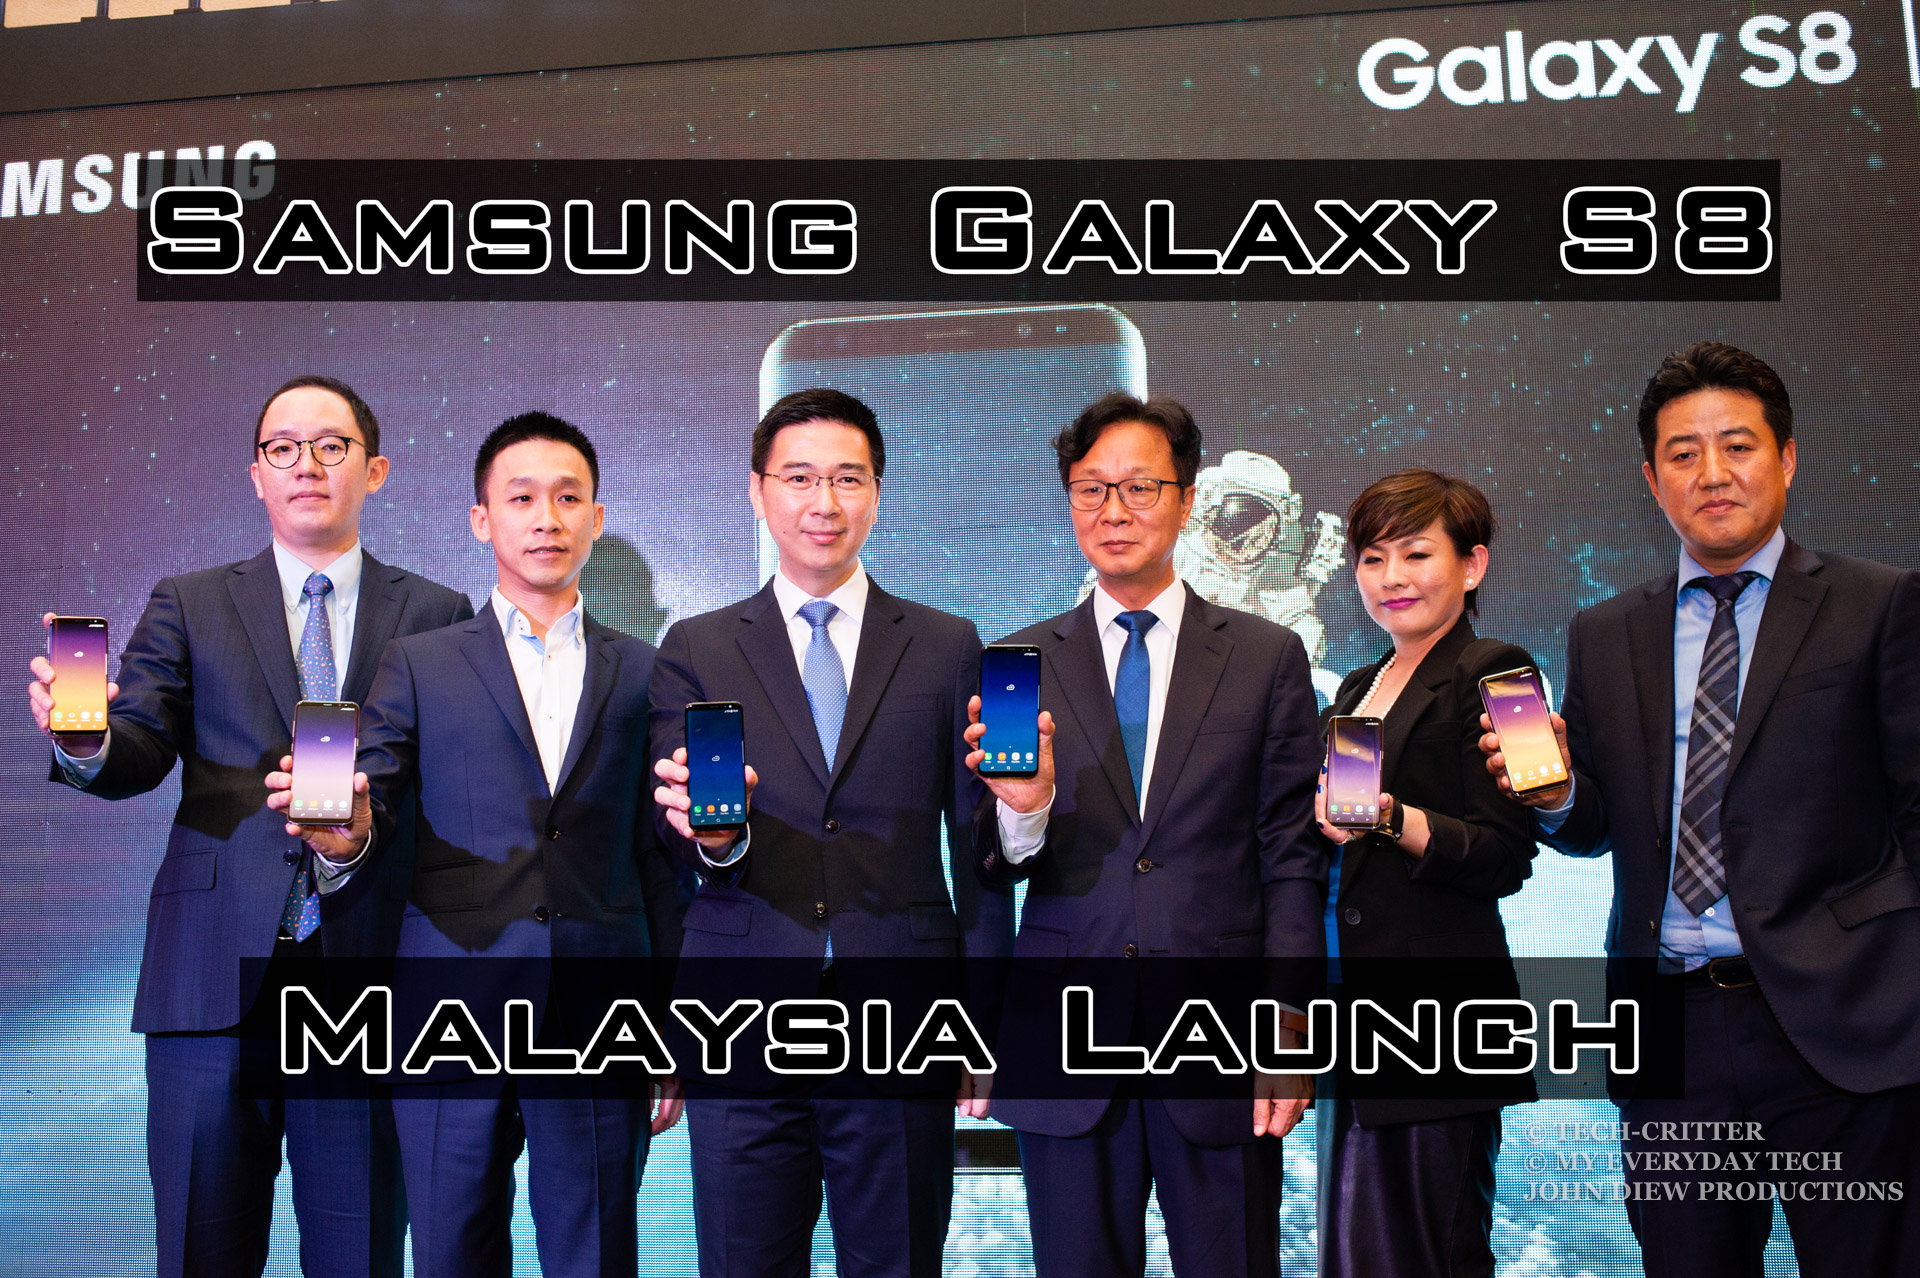 Samsung Galaxy S8 launch